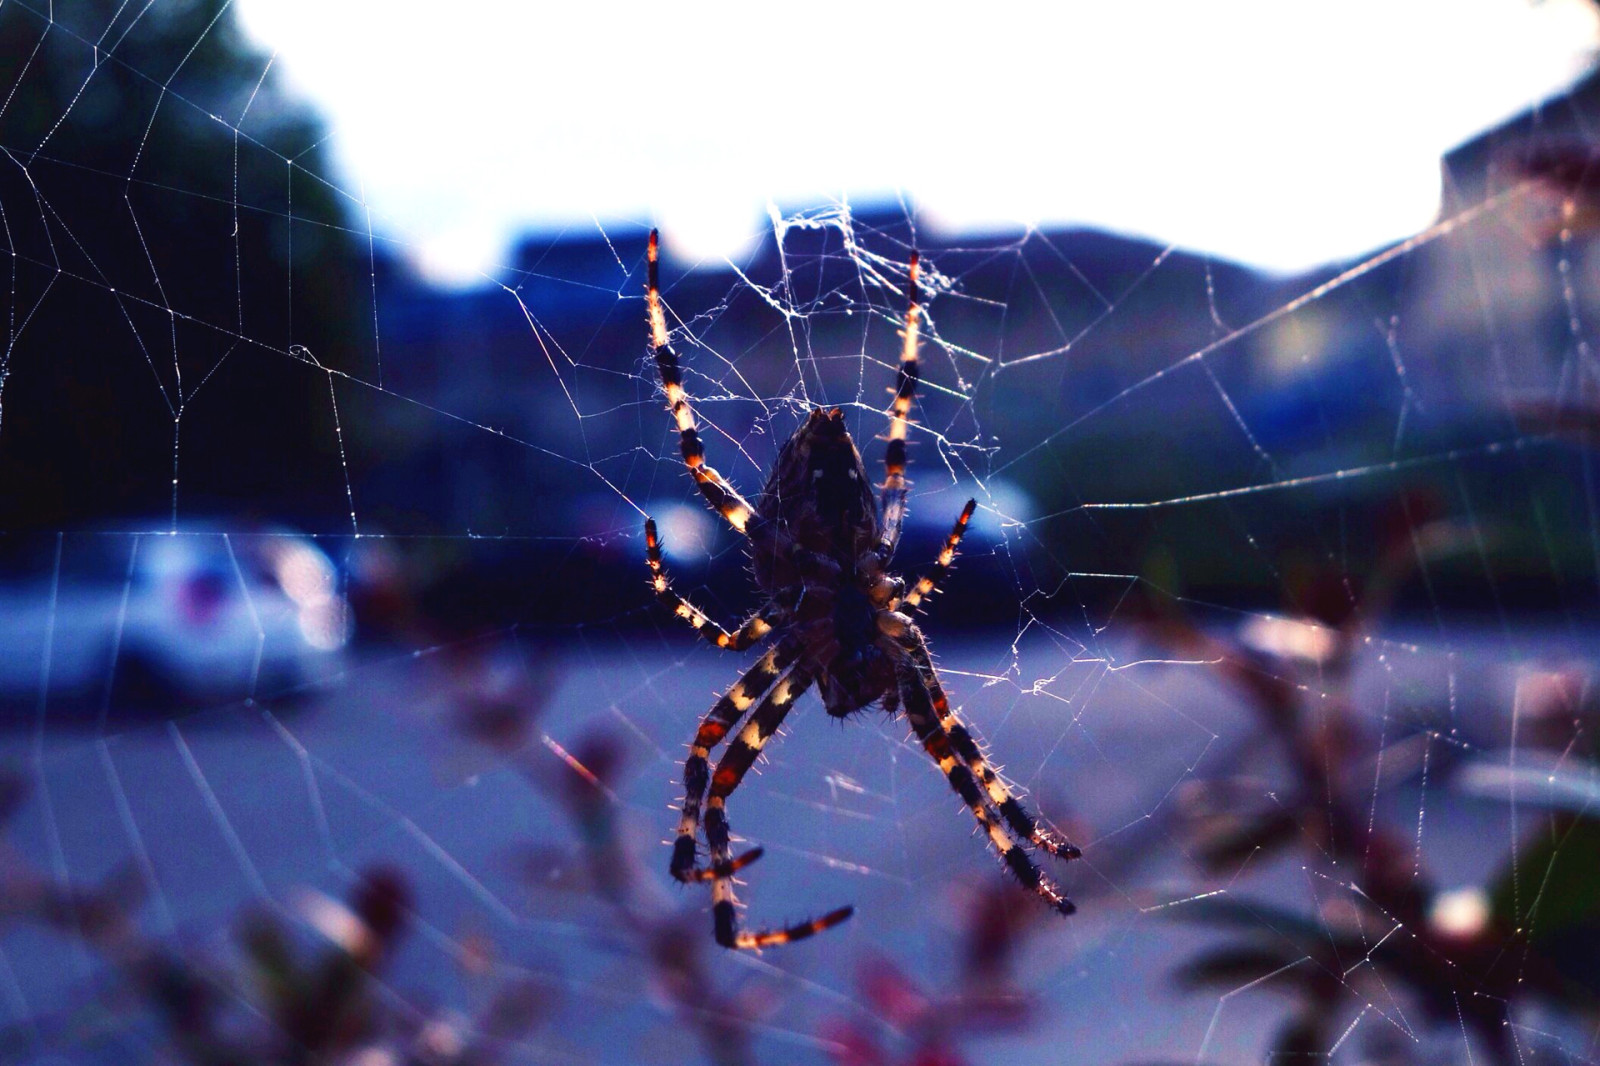 alam, Latar Belakang, kota, web, serangga, Laba-laba